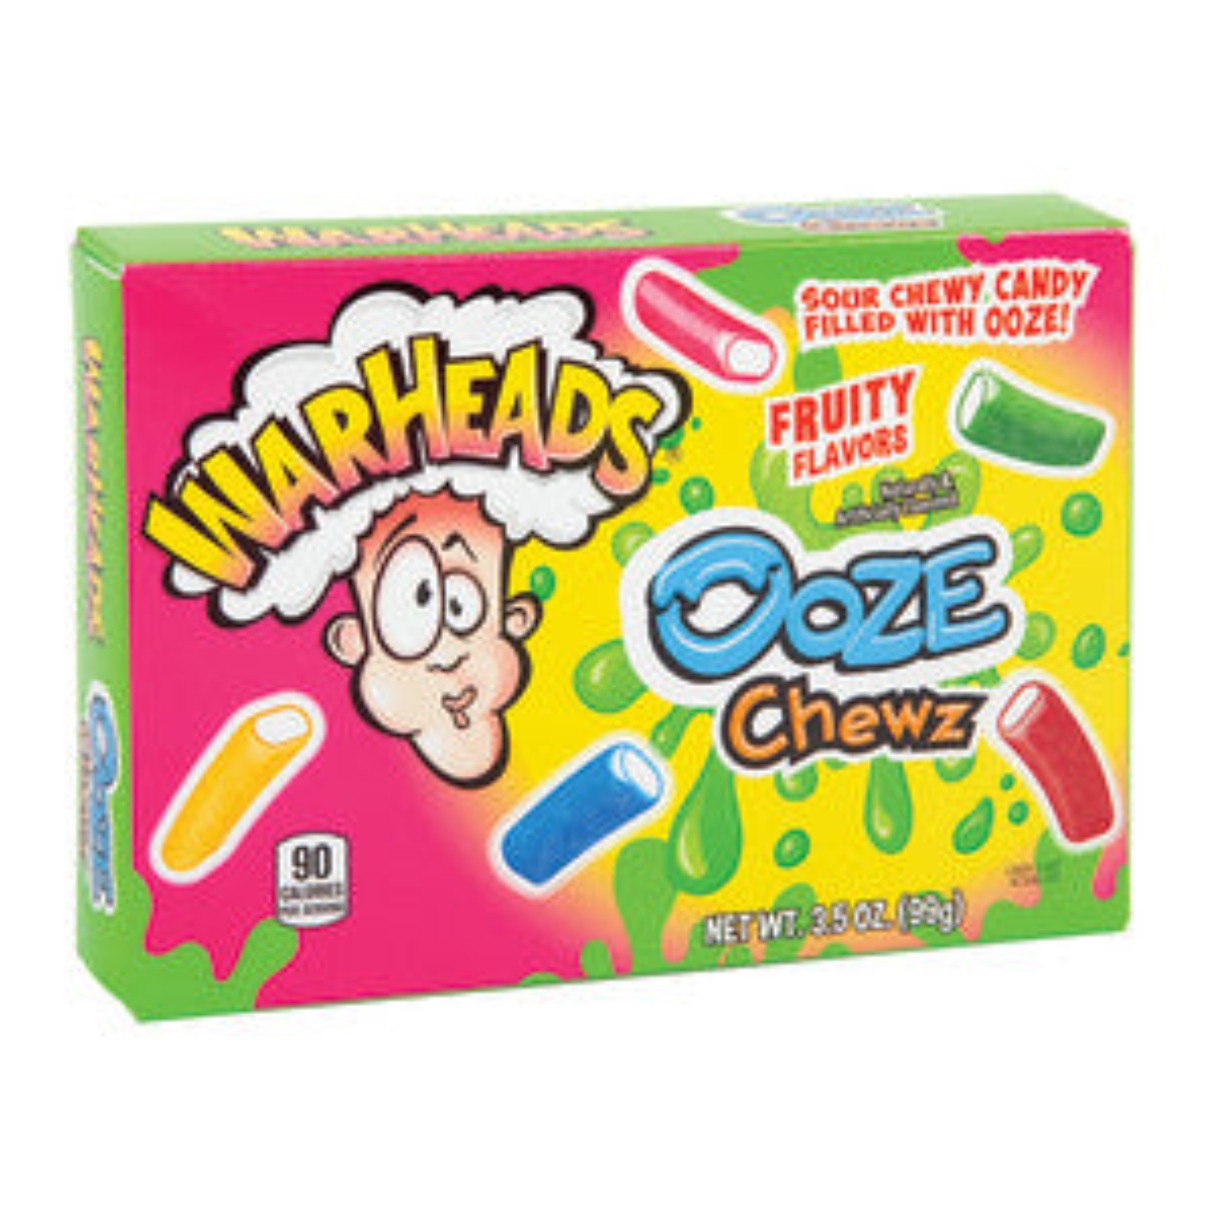 War Heads Ooze Chews Box 3.5oz - 12ct